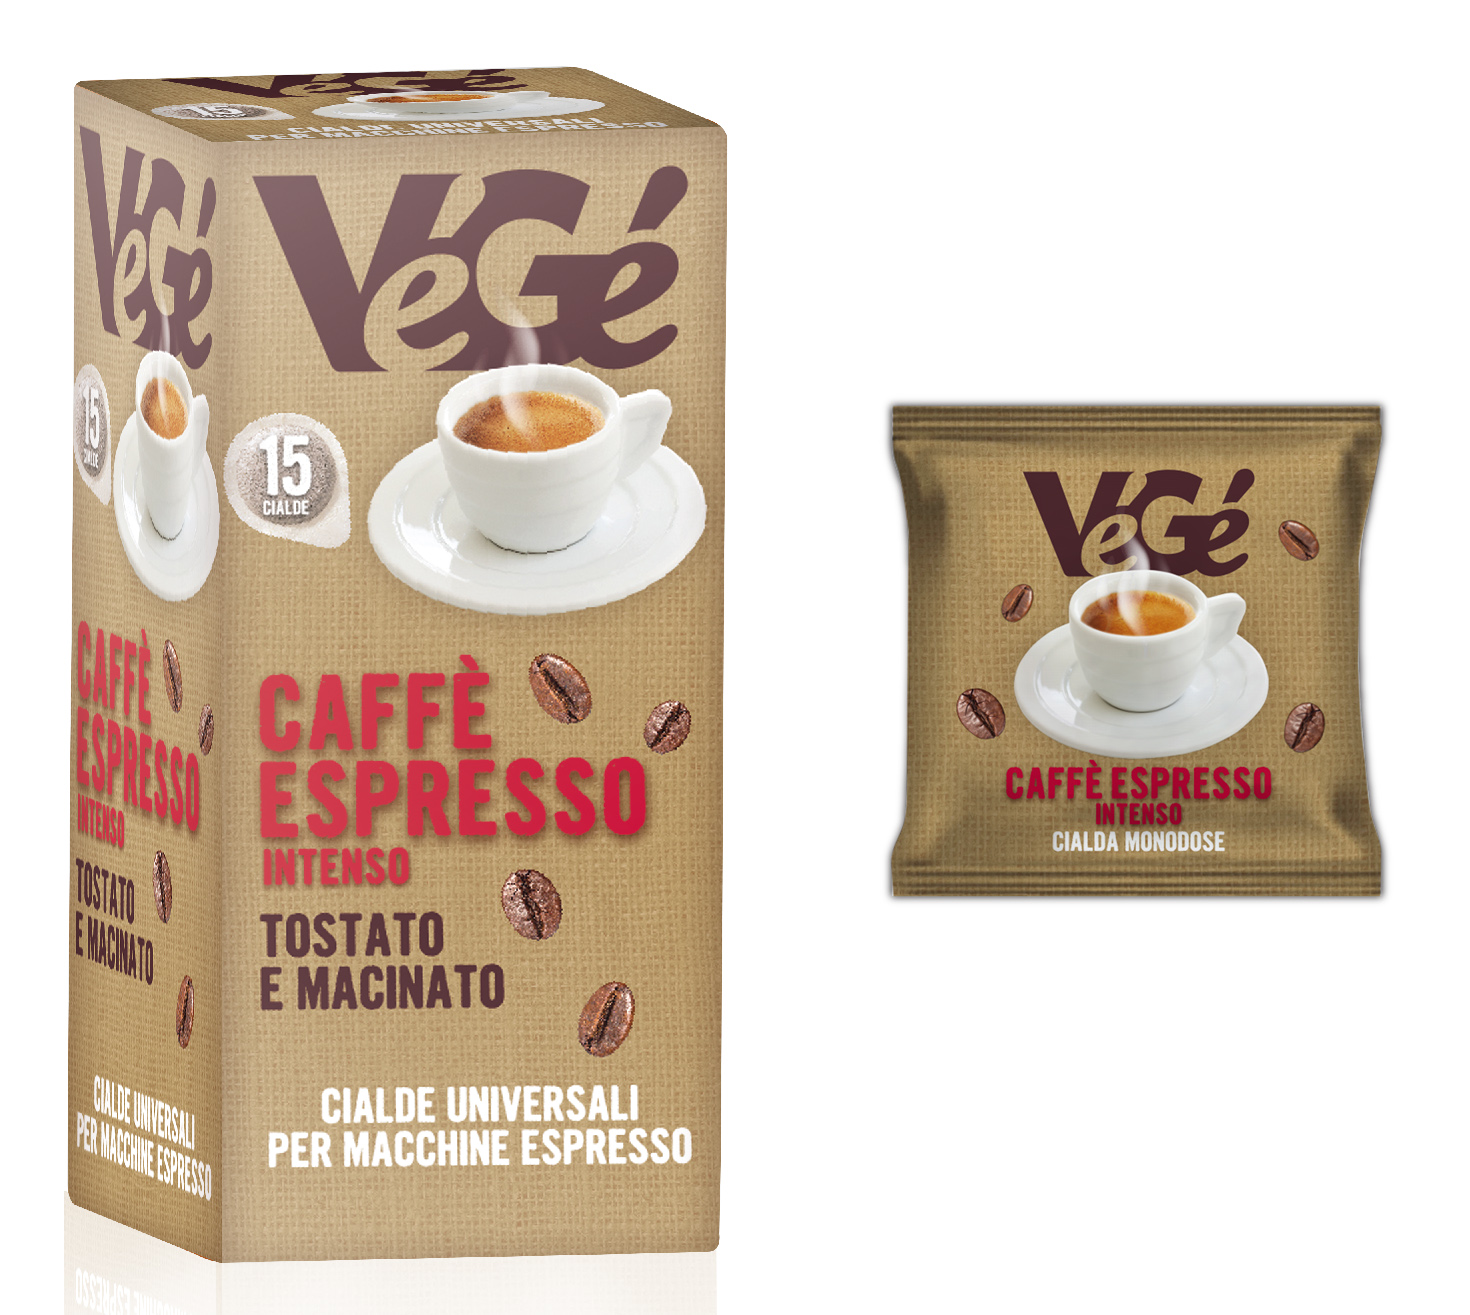 Caffè espresso Vegé GDO (Grande Distribuzione Organizzata)